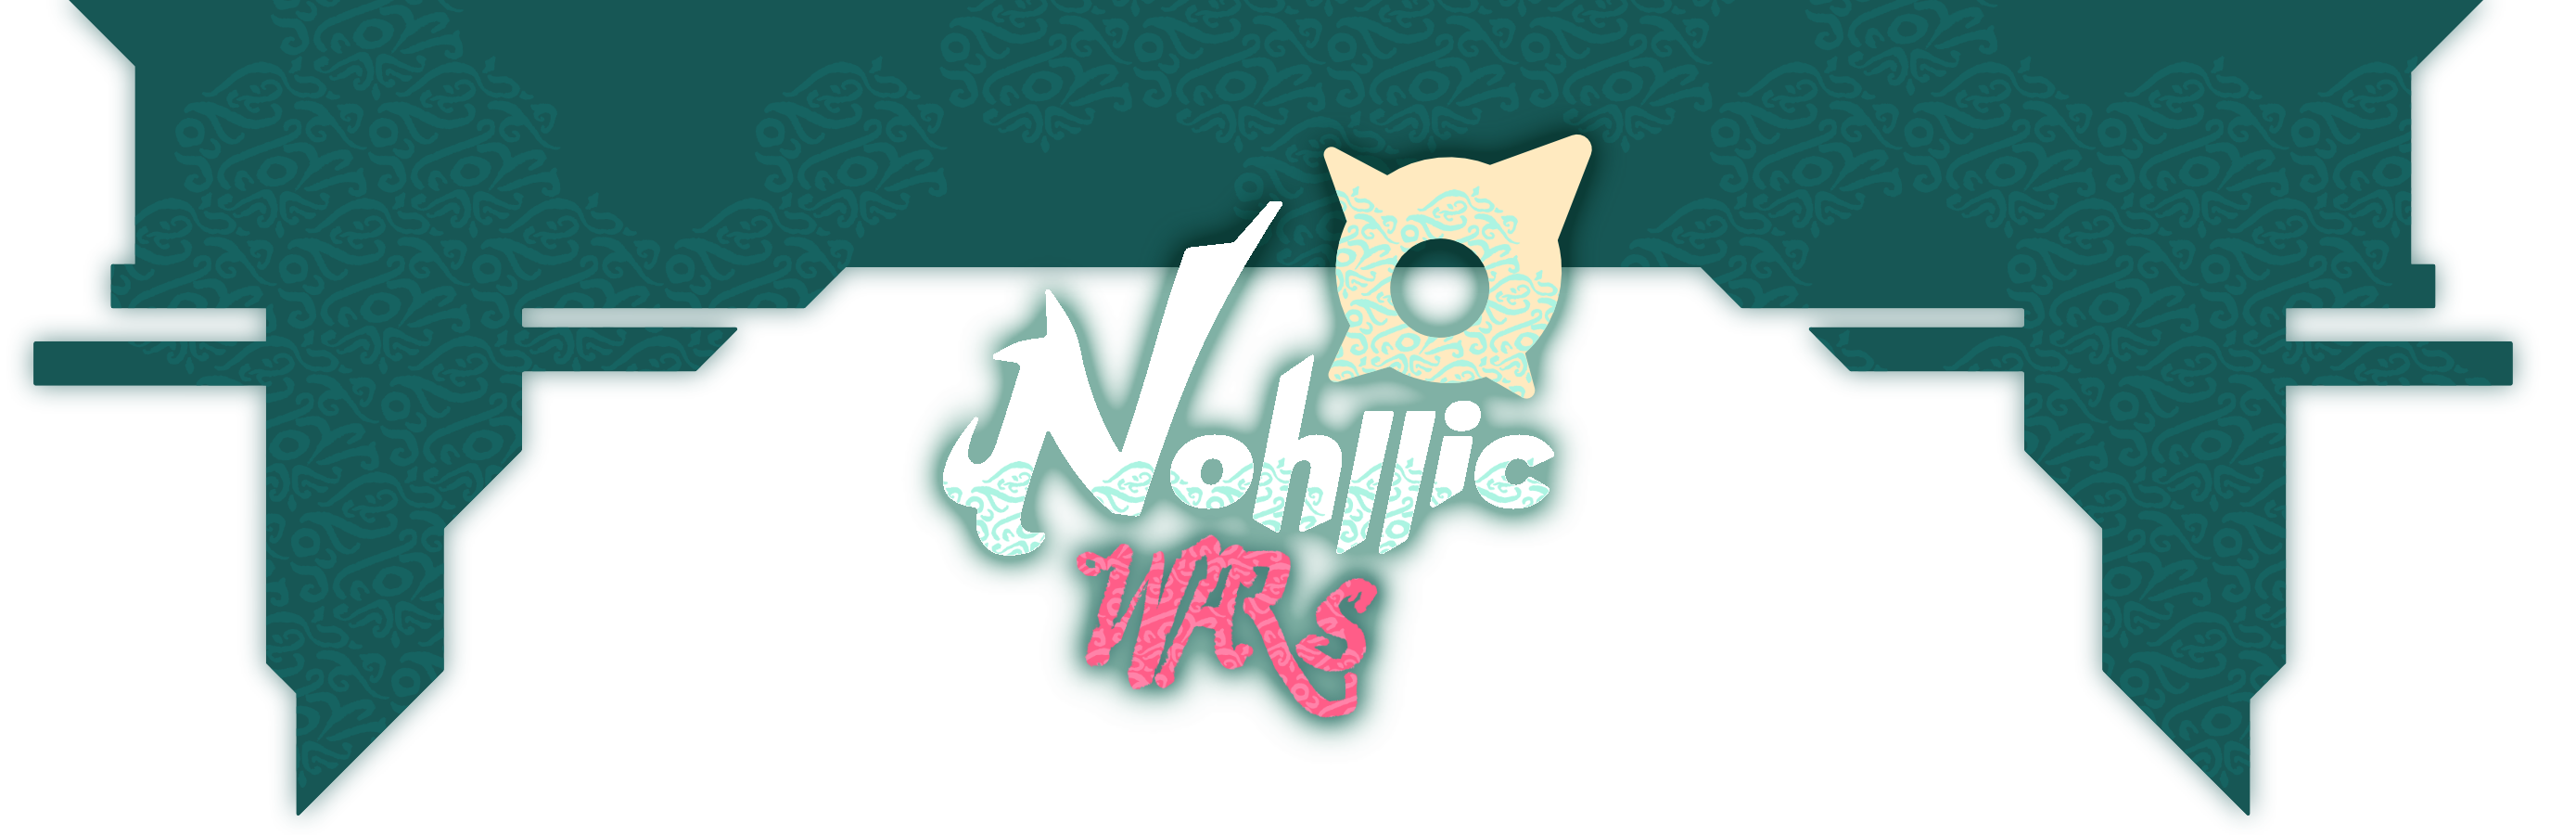 Nohllic Wars